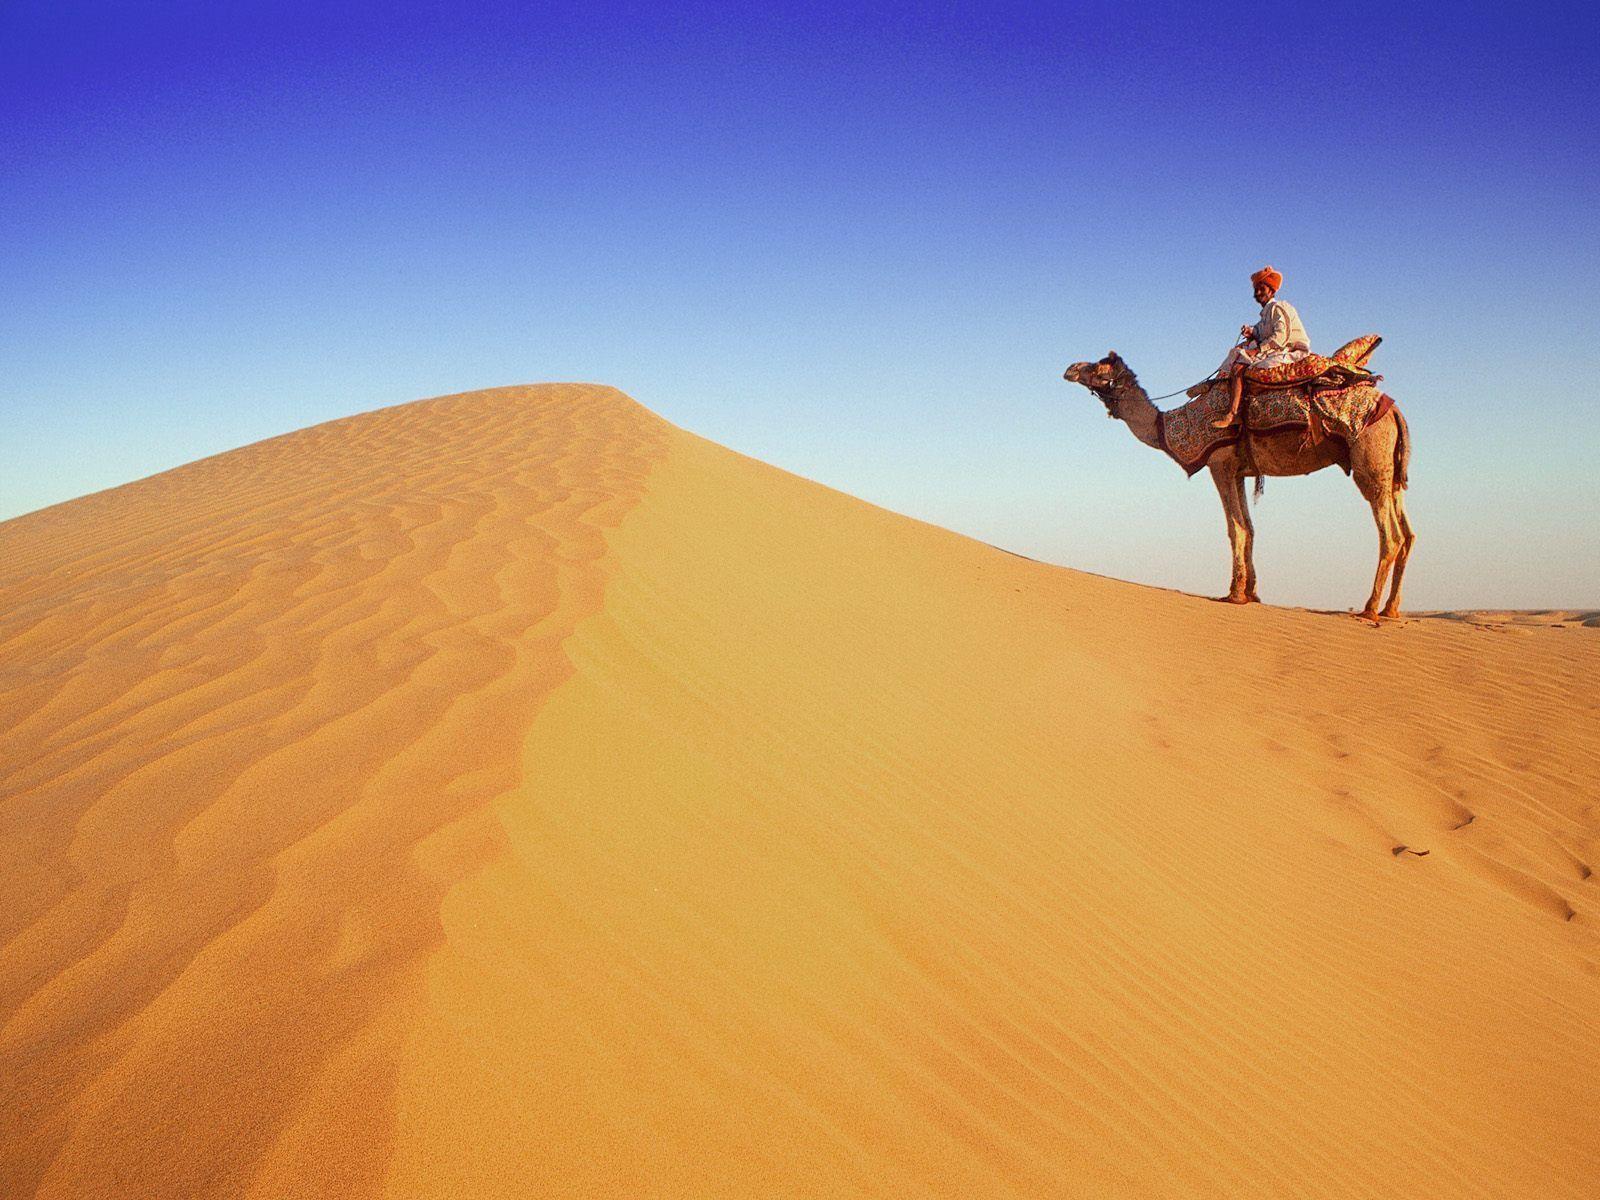 Wallpaper For > Desert And Camel Wallpaper HD